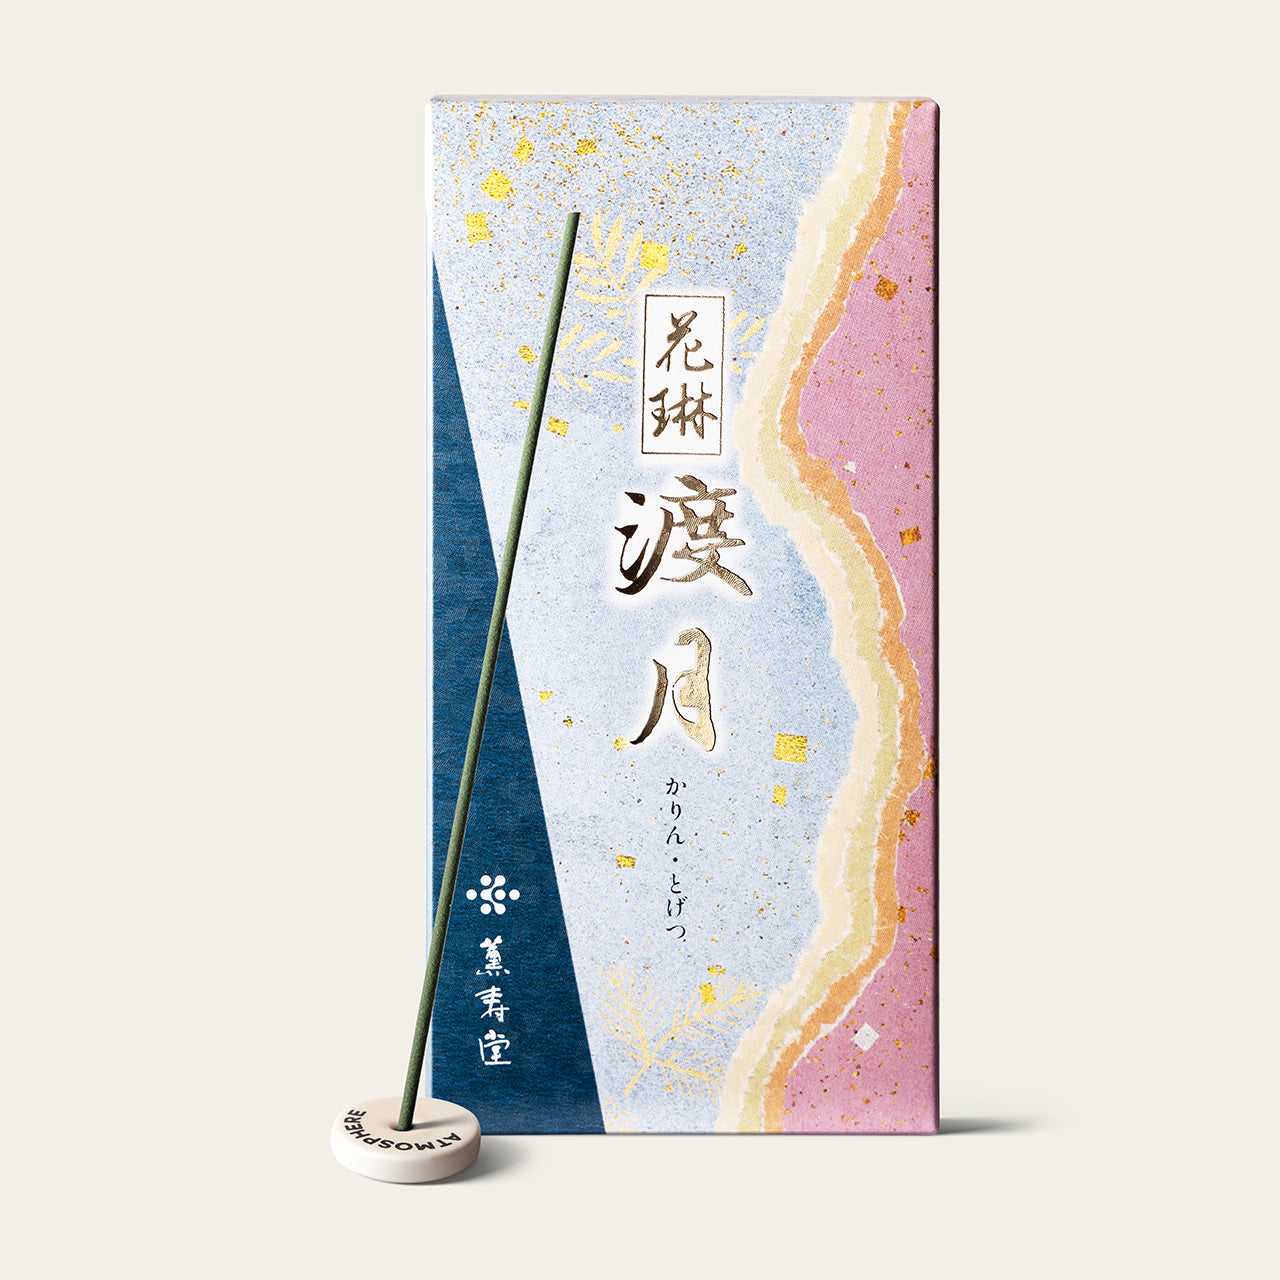 Kunjudo Moonlit Trail Karin Togetsu Japanese incense sticks (220 sticks) with Atmosphere ceramic incense holder